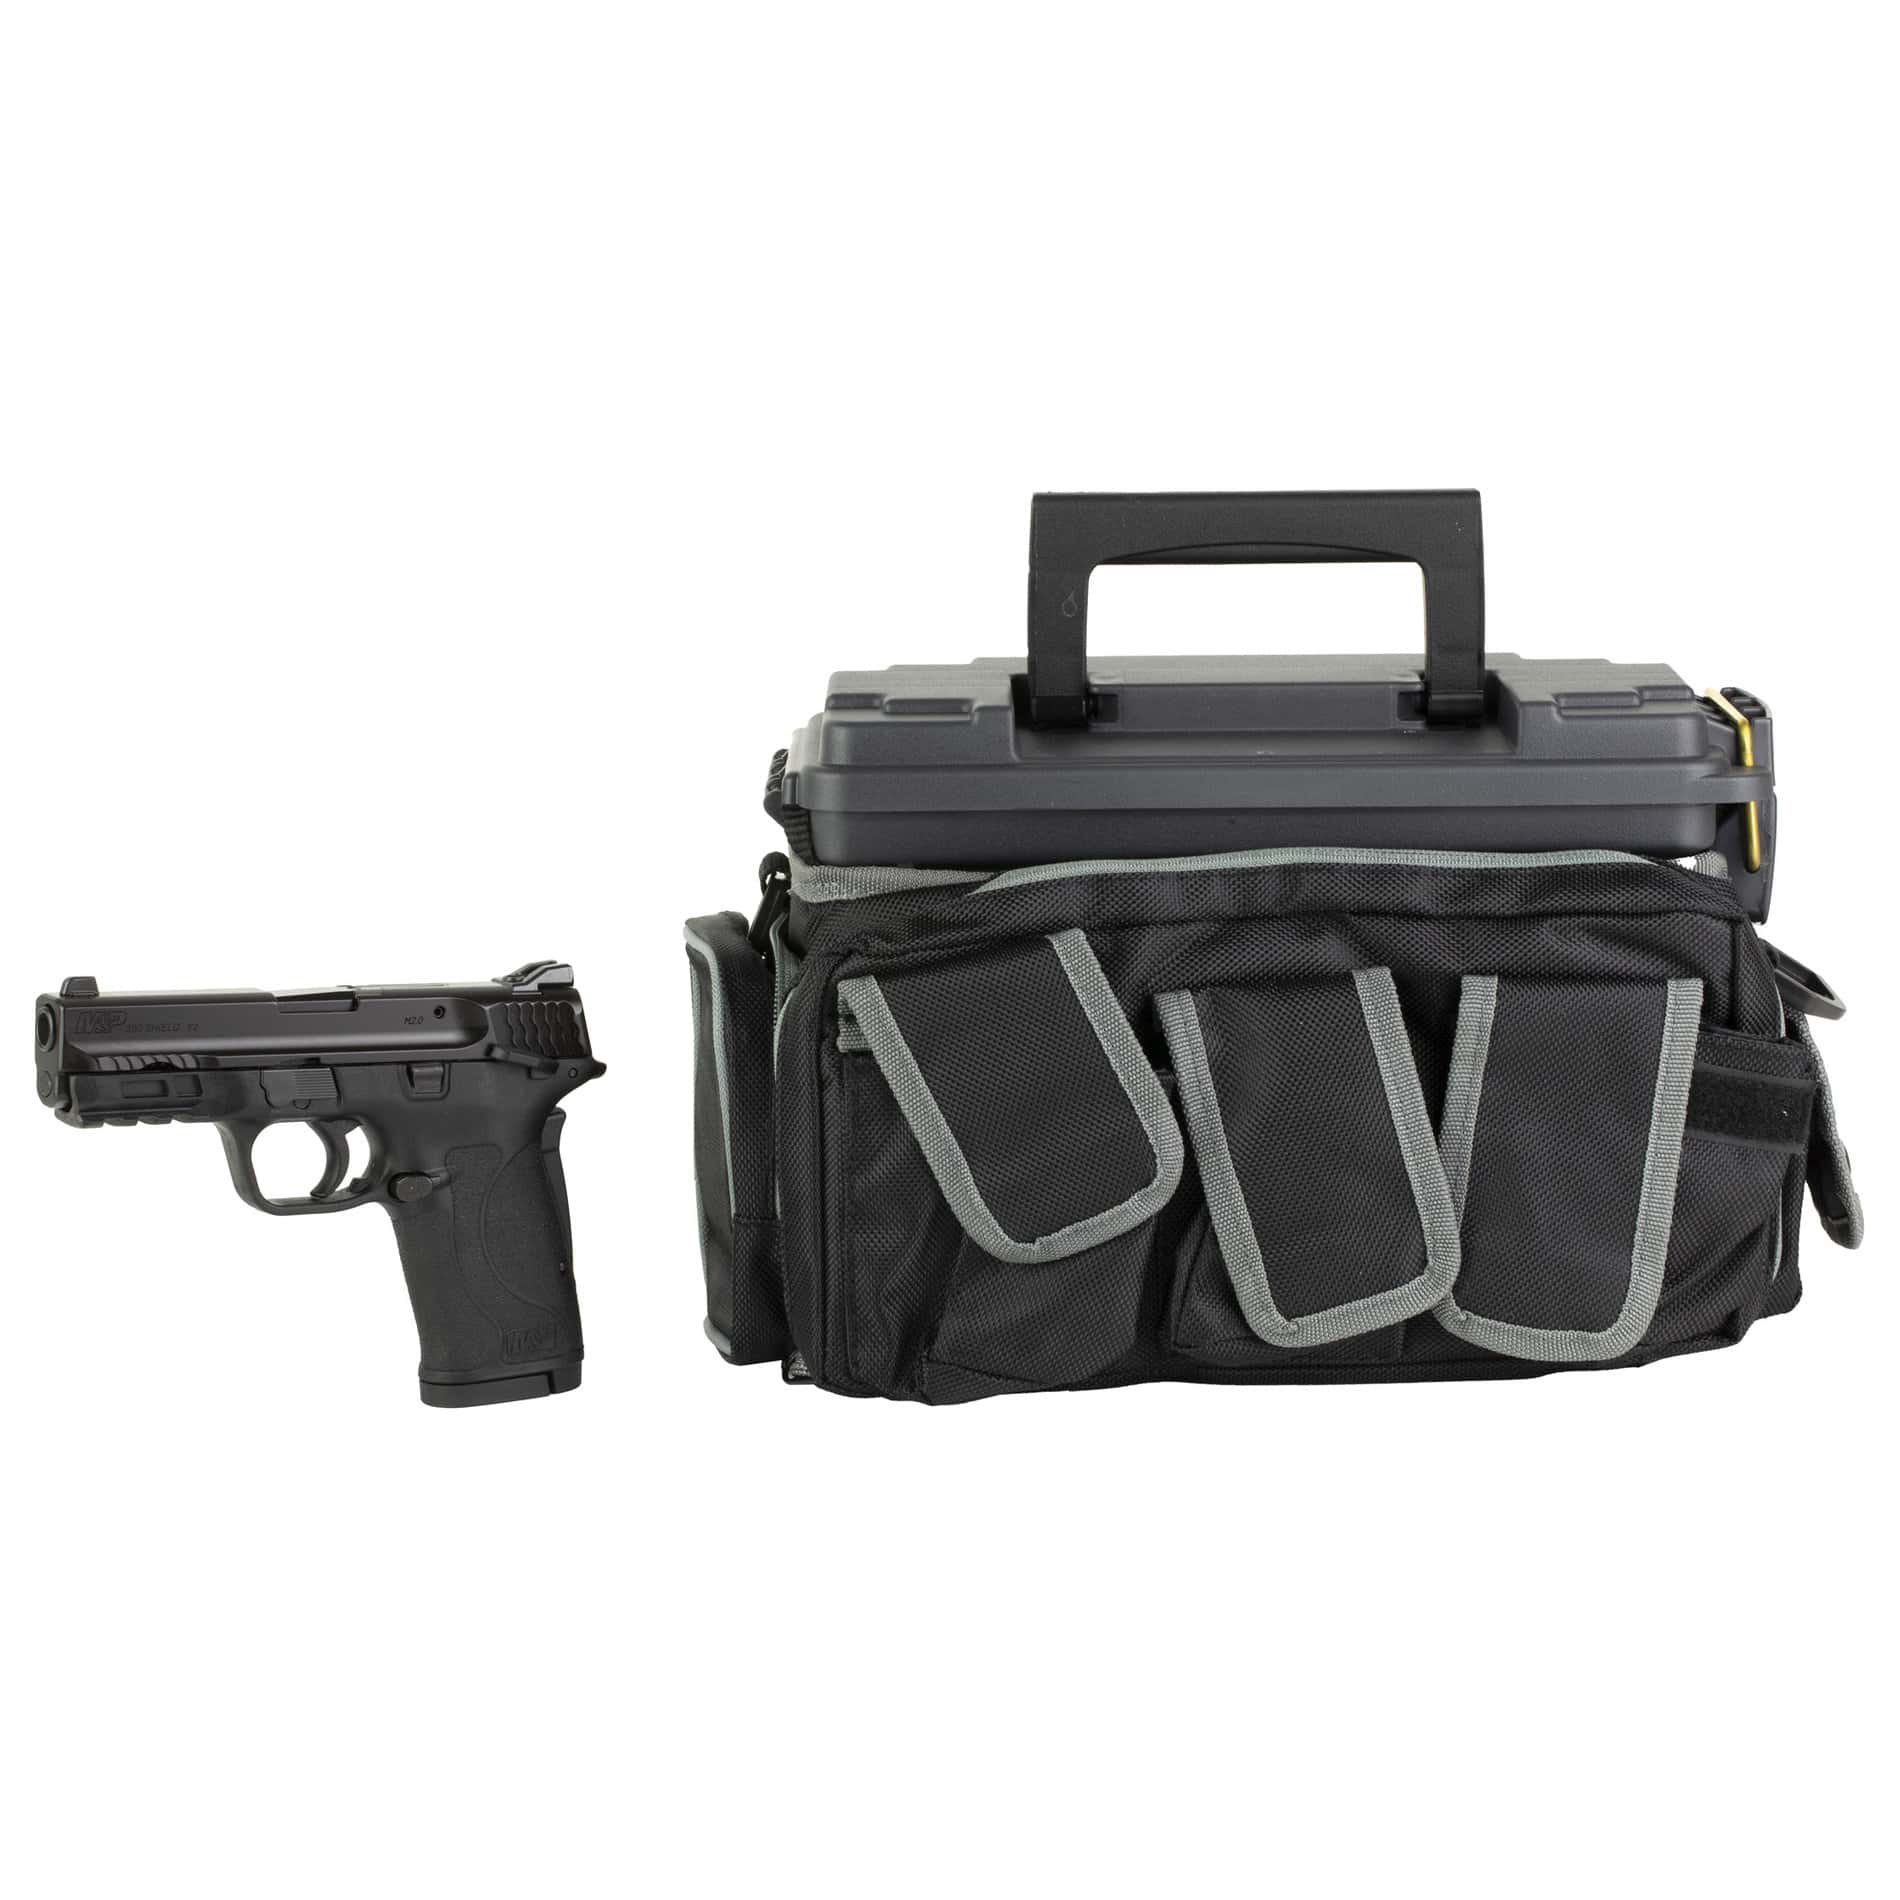 S&W Shield 2.0 EZ 380 ACP Pistol Range Bag Bundle - 8 Round - Manual Safety